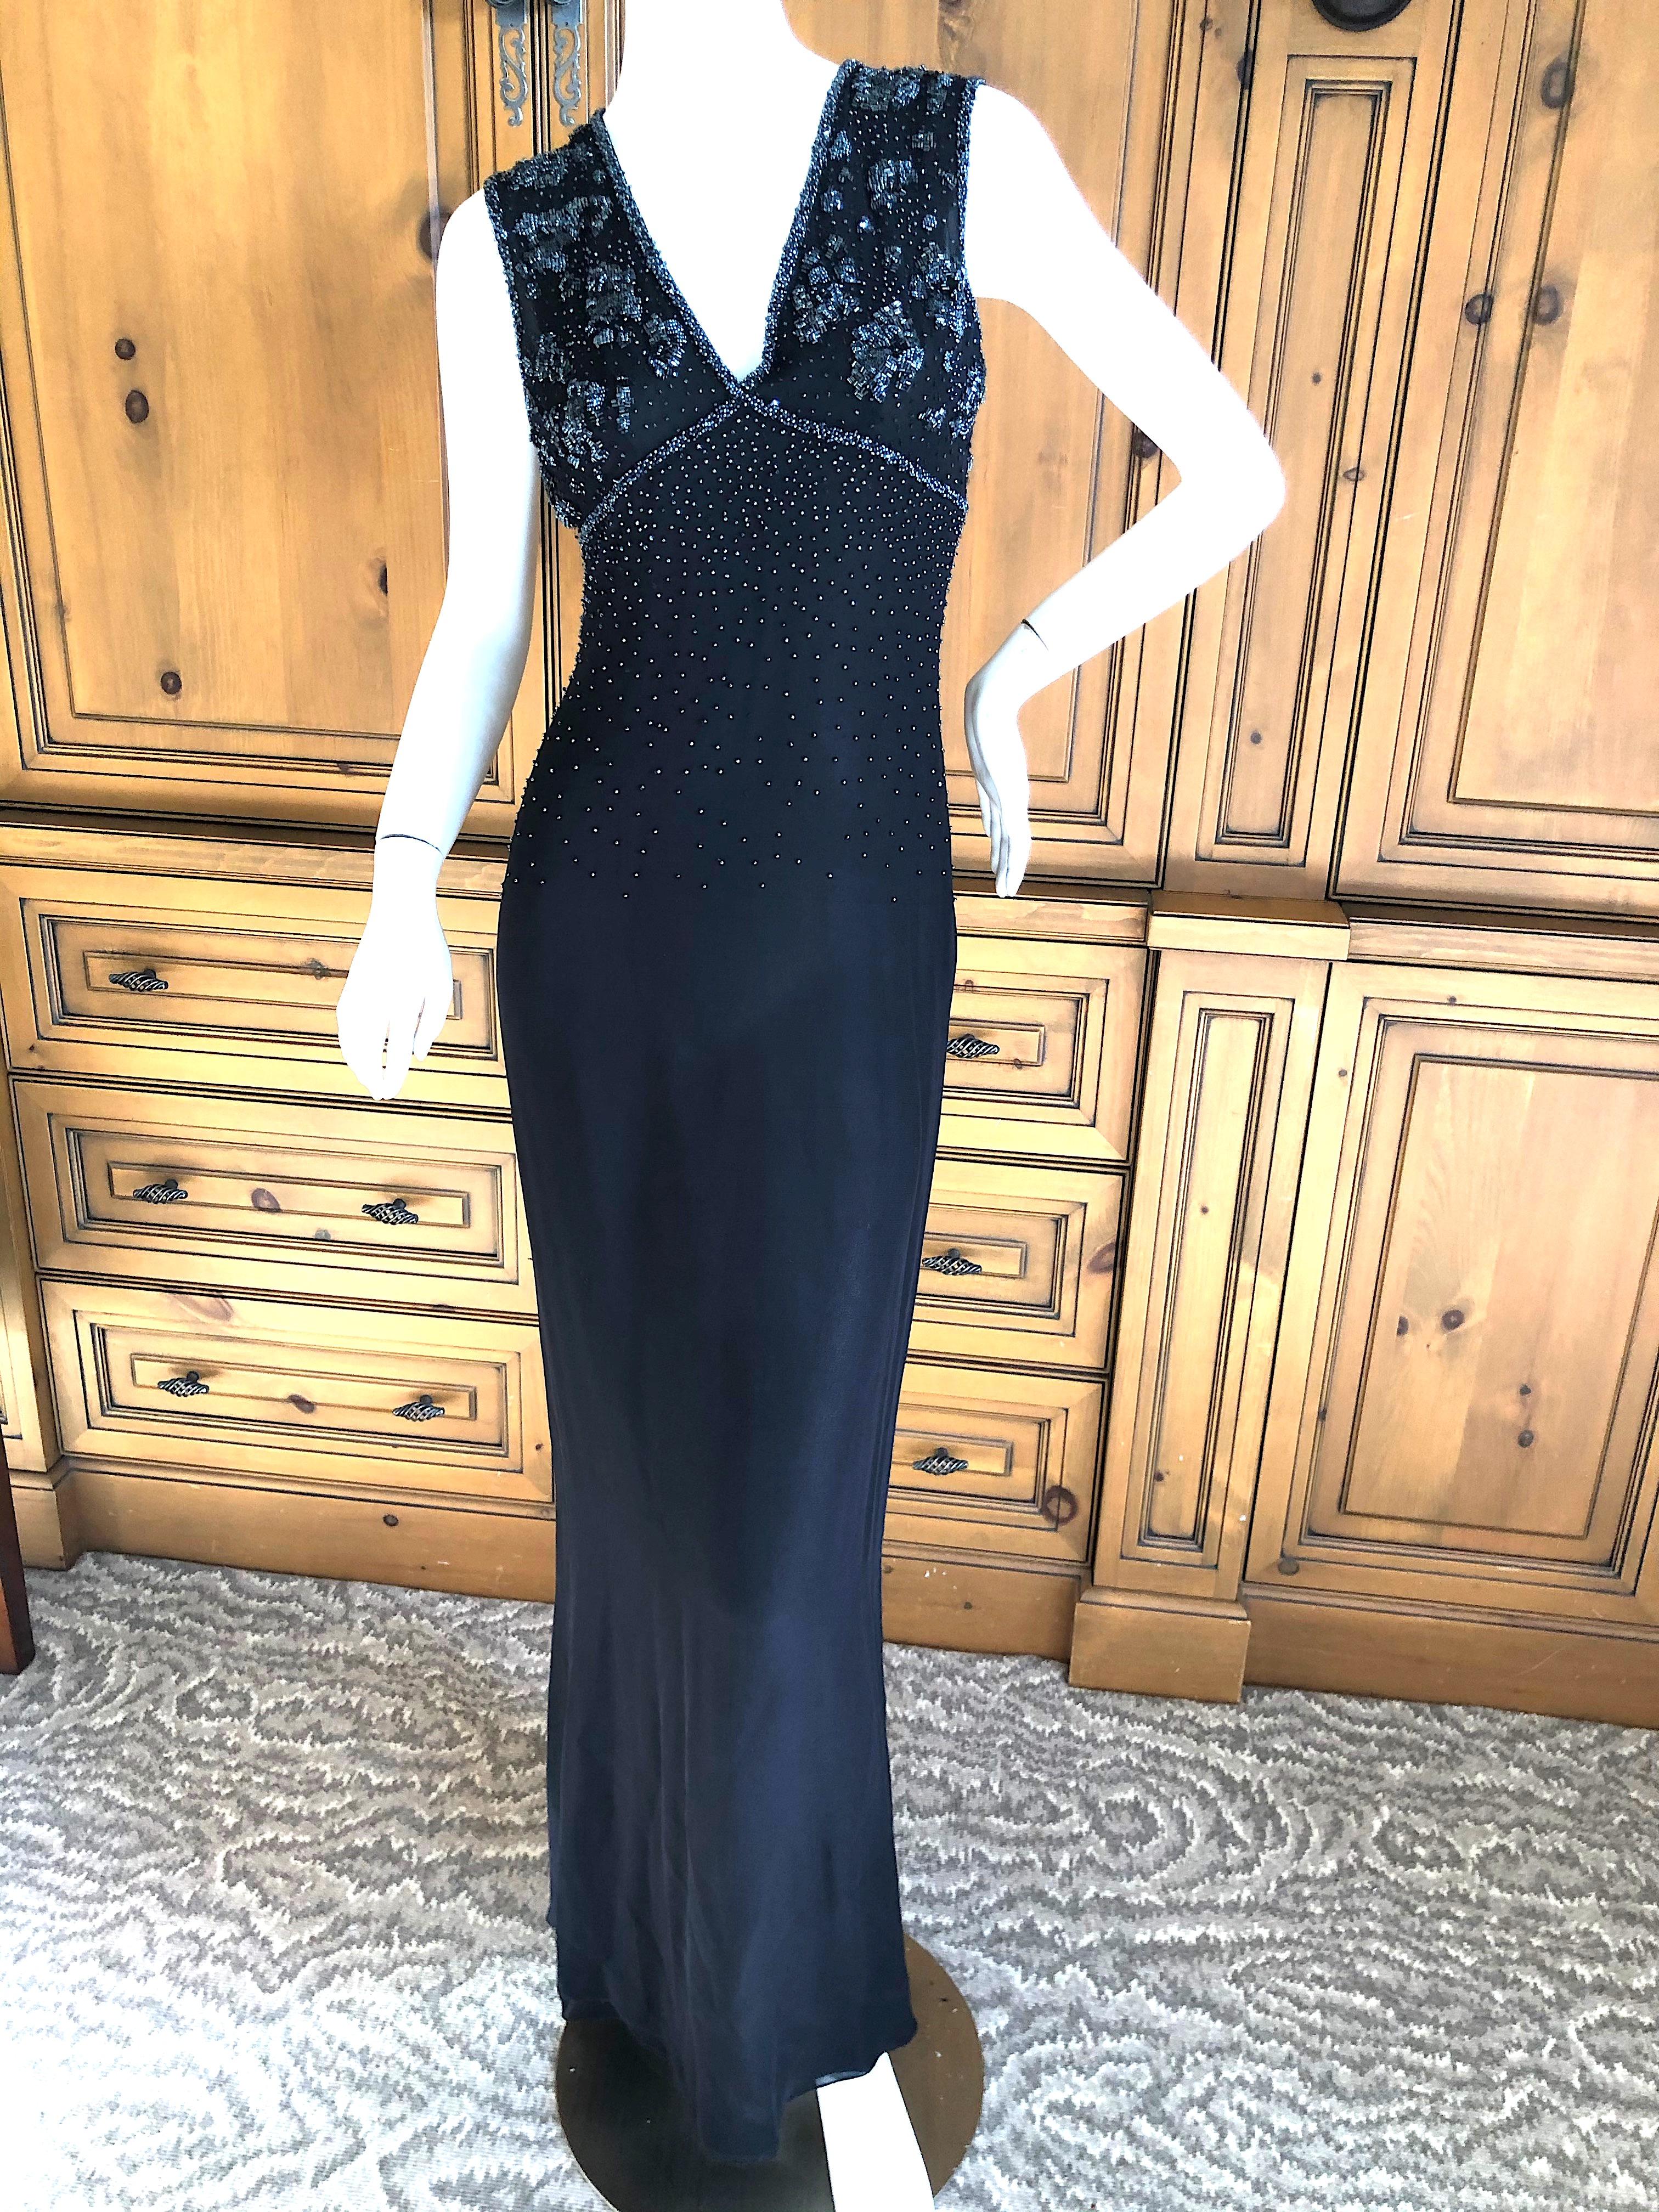 Emanuel Ungaro Parallel Vintage Black Evening Dress w Hematite Seed Bead Details For Sale 1